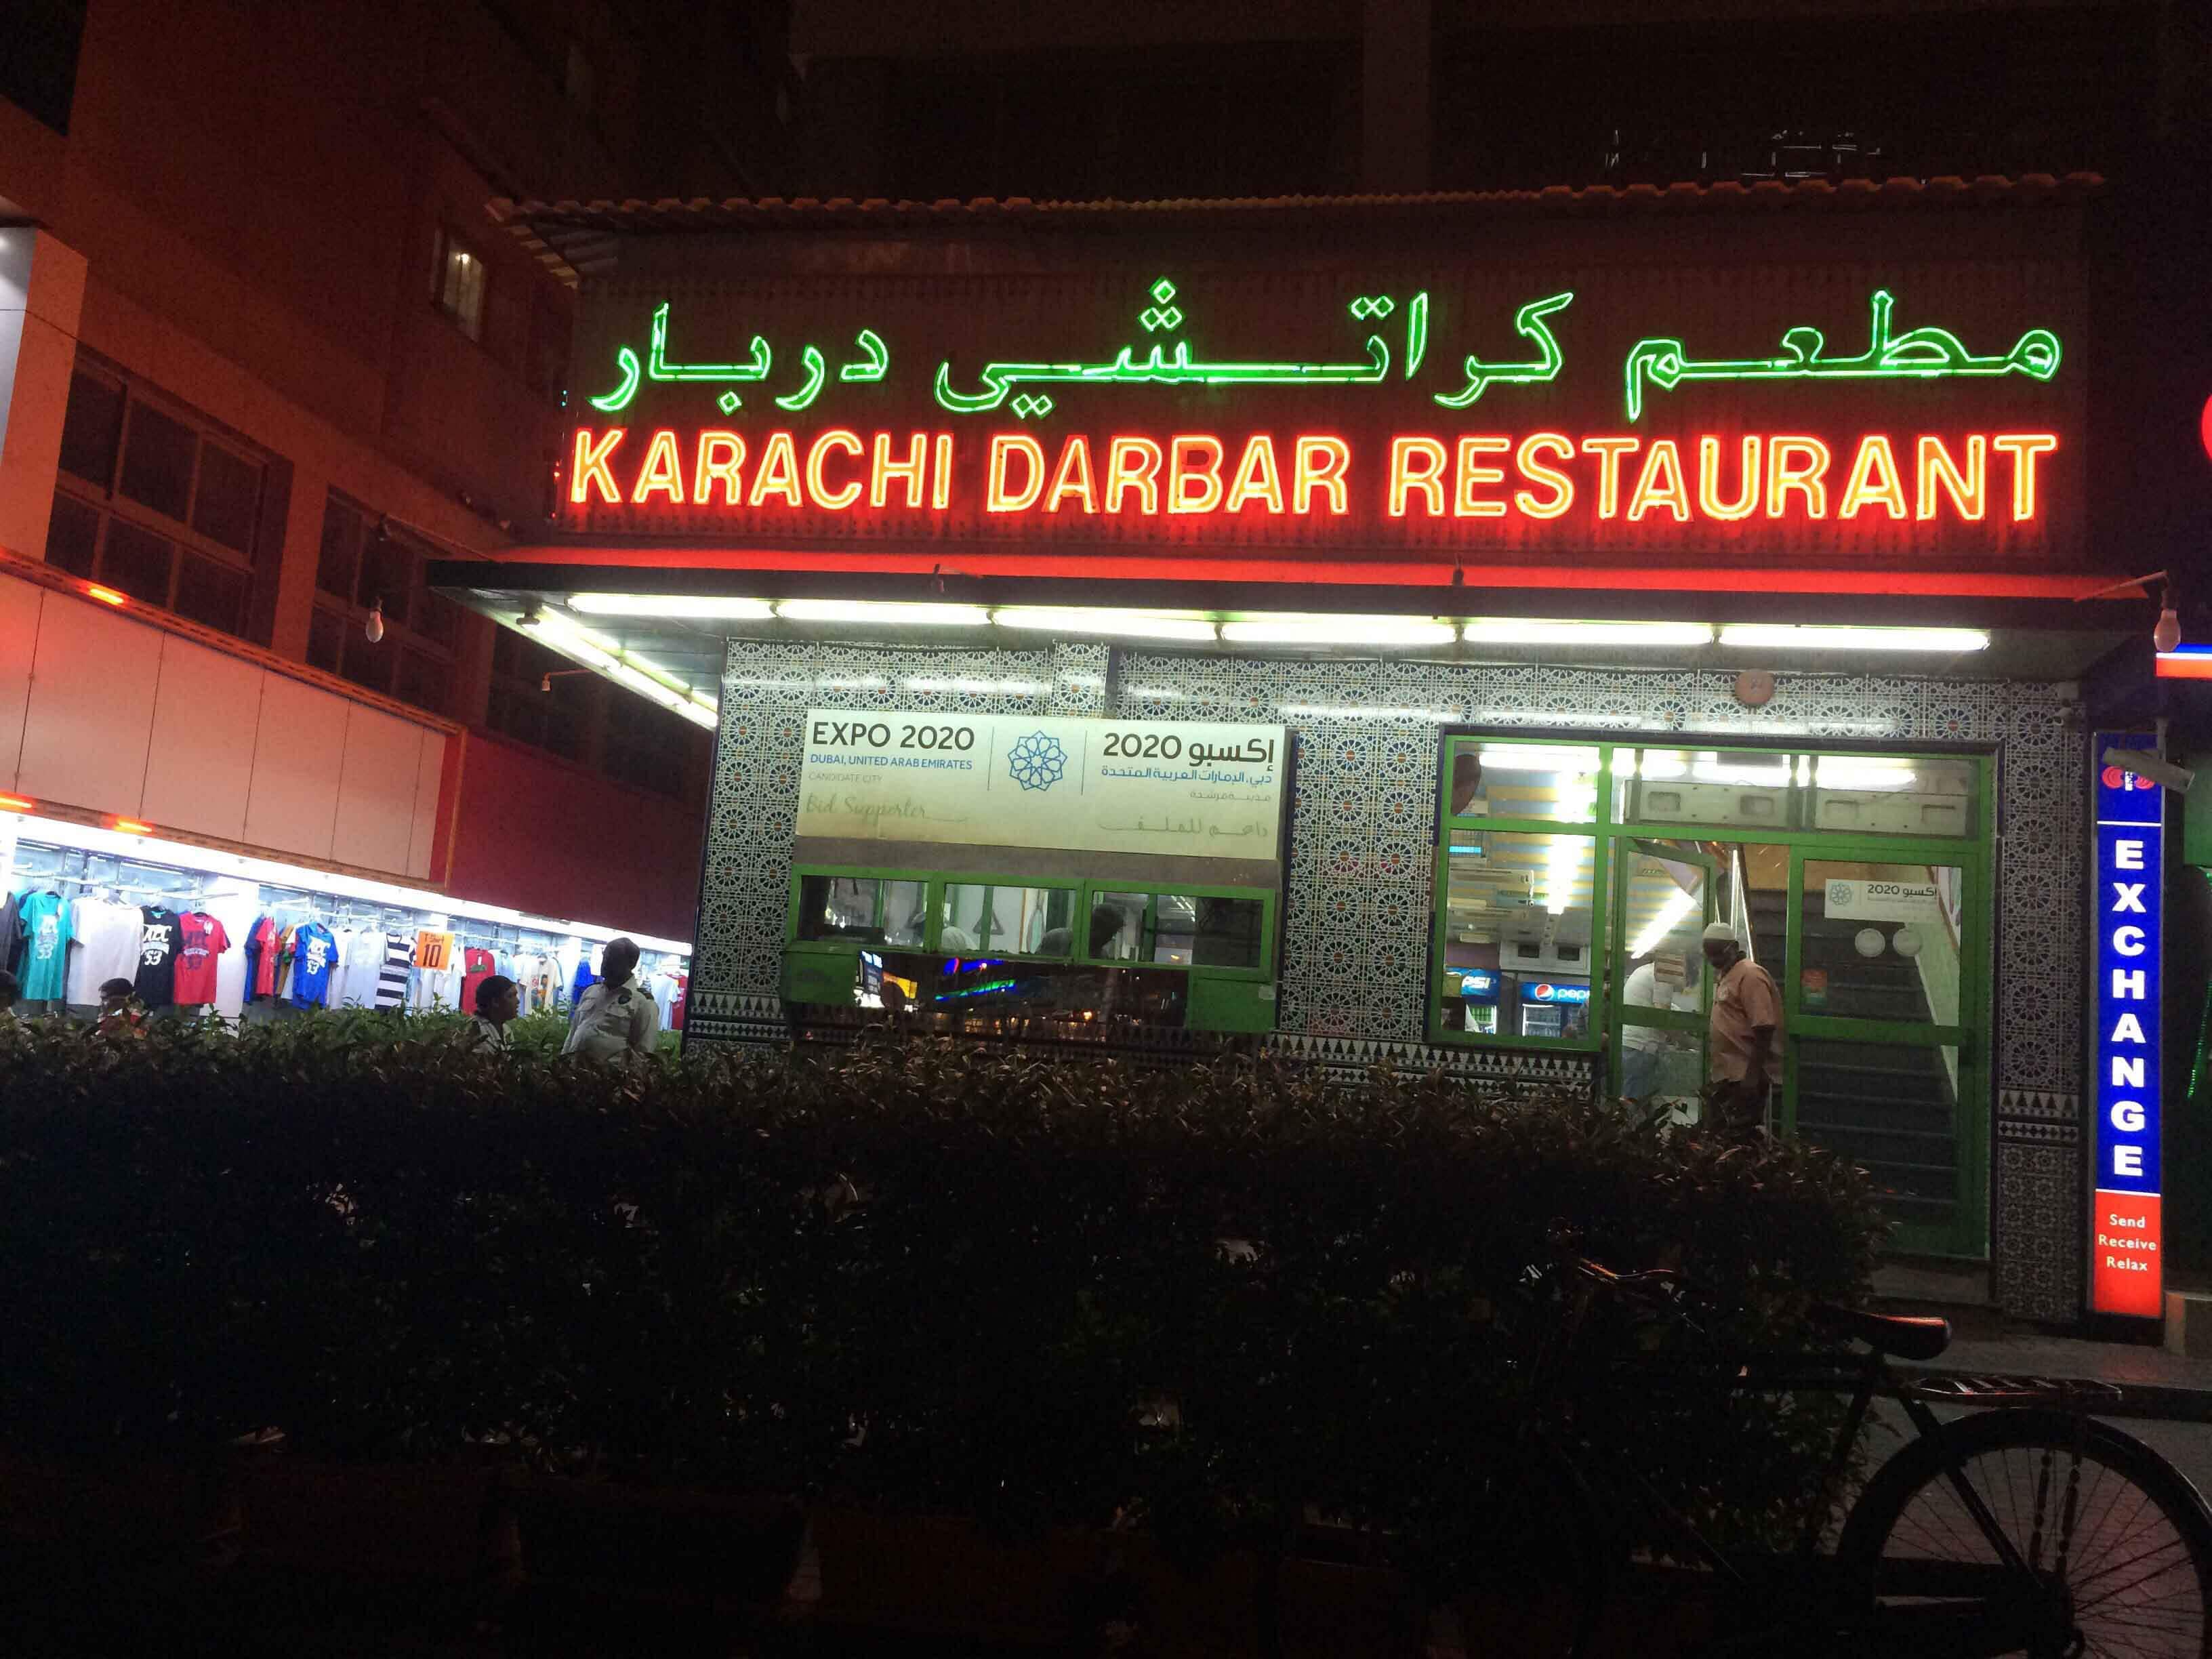 Karachi Darbar, Meena Bazaar, Dubai | Zomato